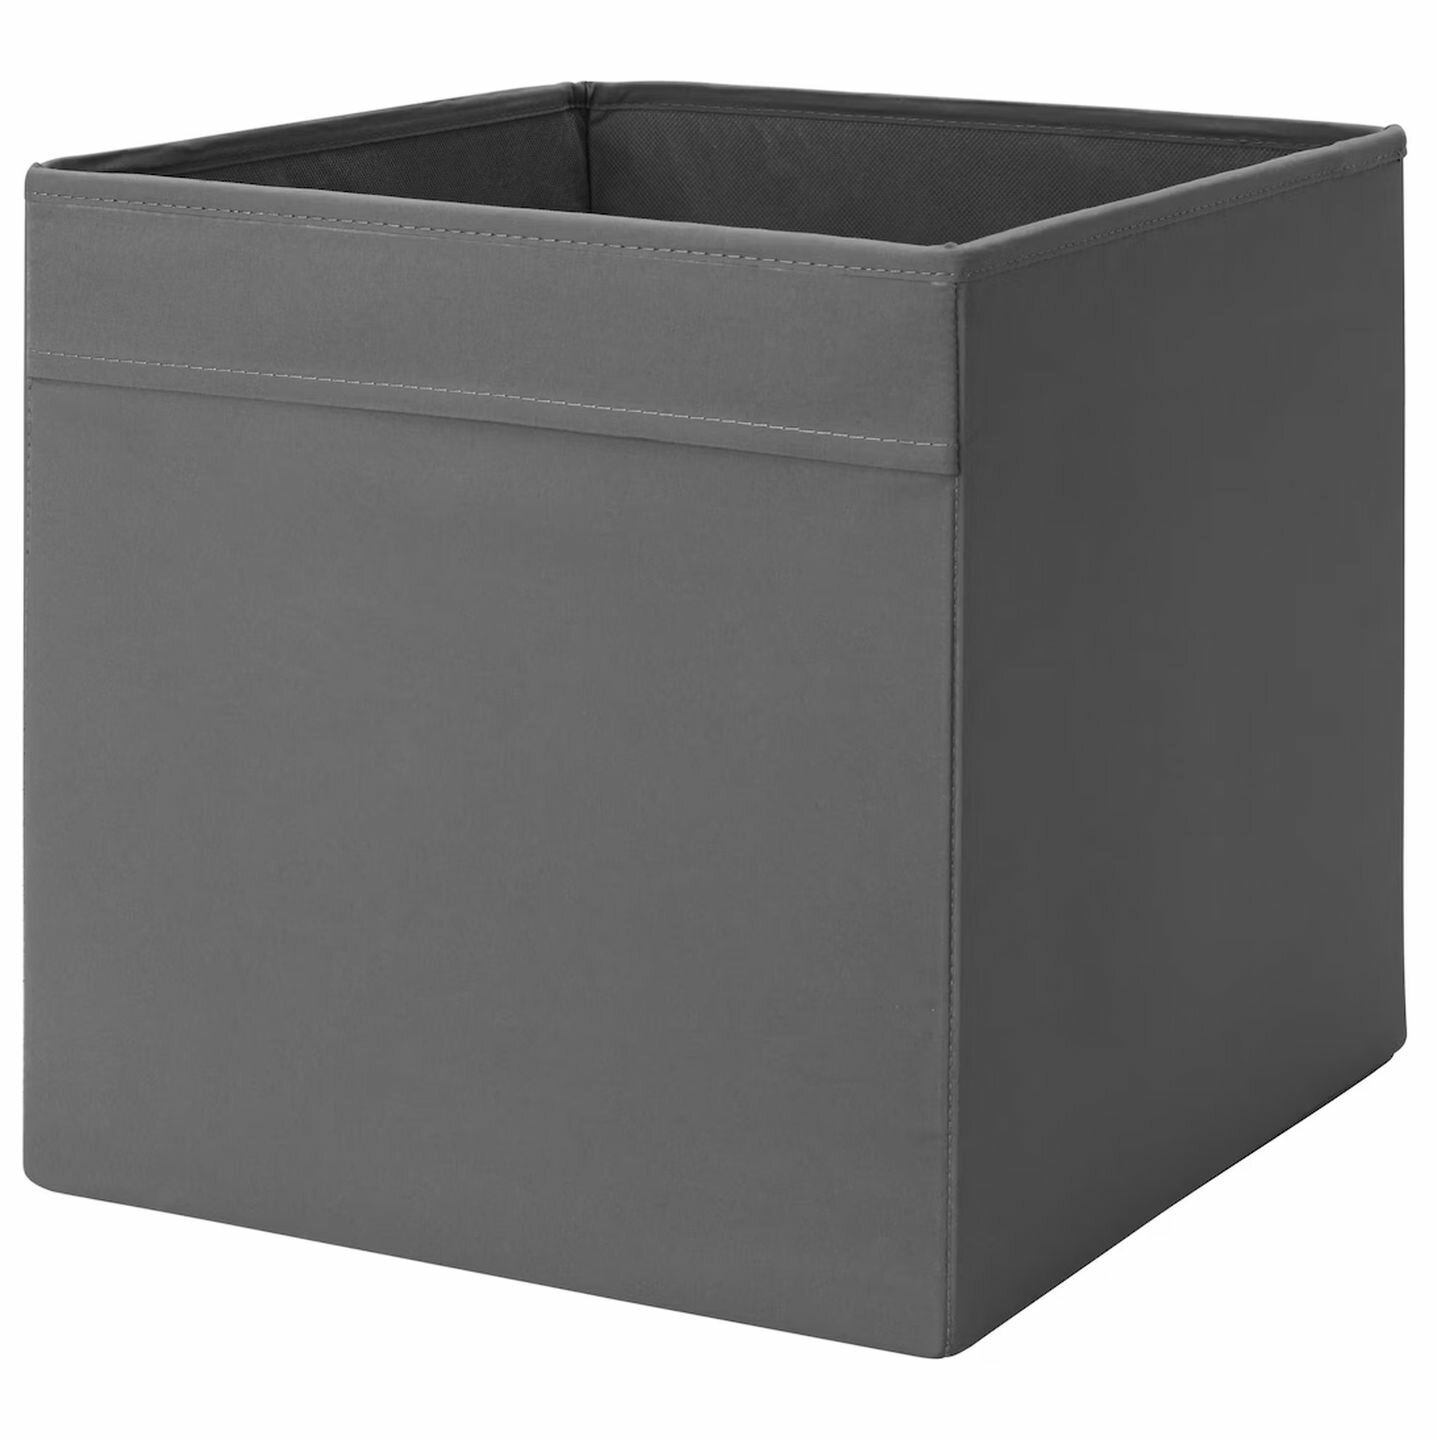 Коробка икеа дрена, серый, короб для хранения вещей, 33х38х33 см.